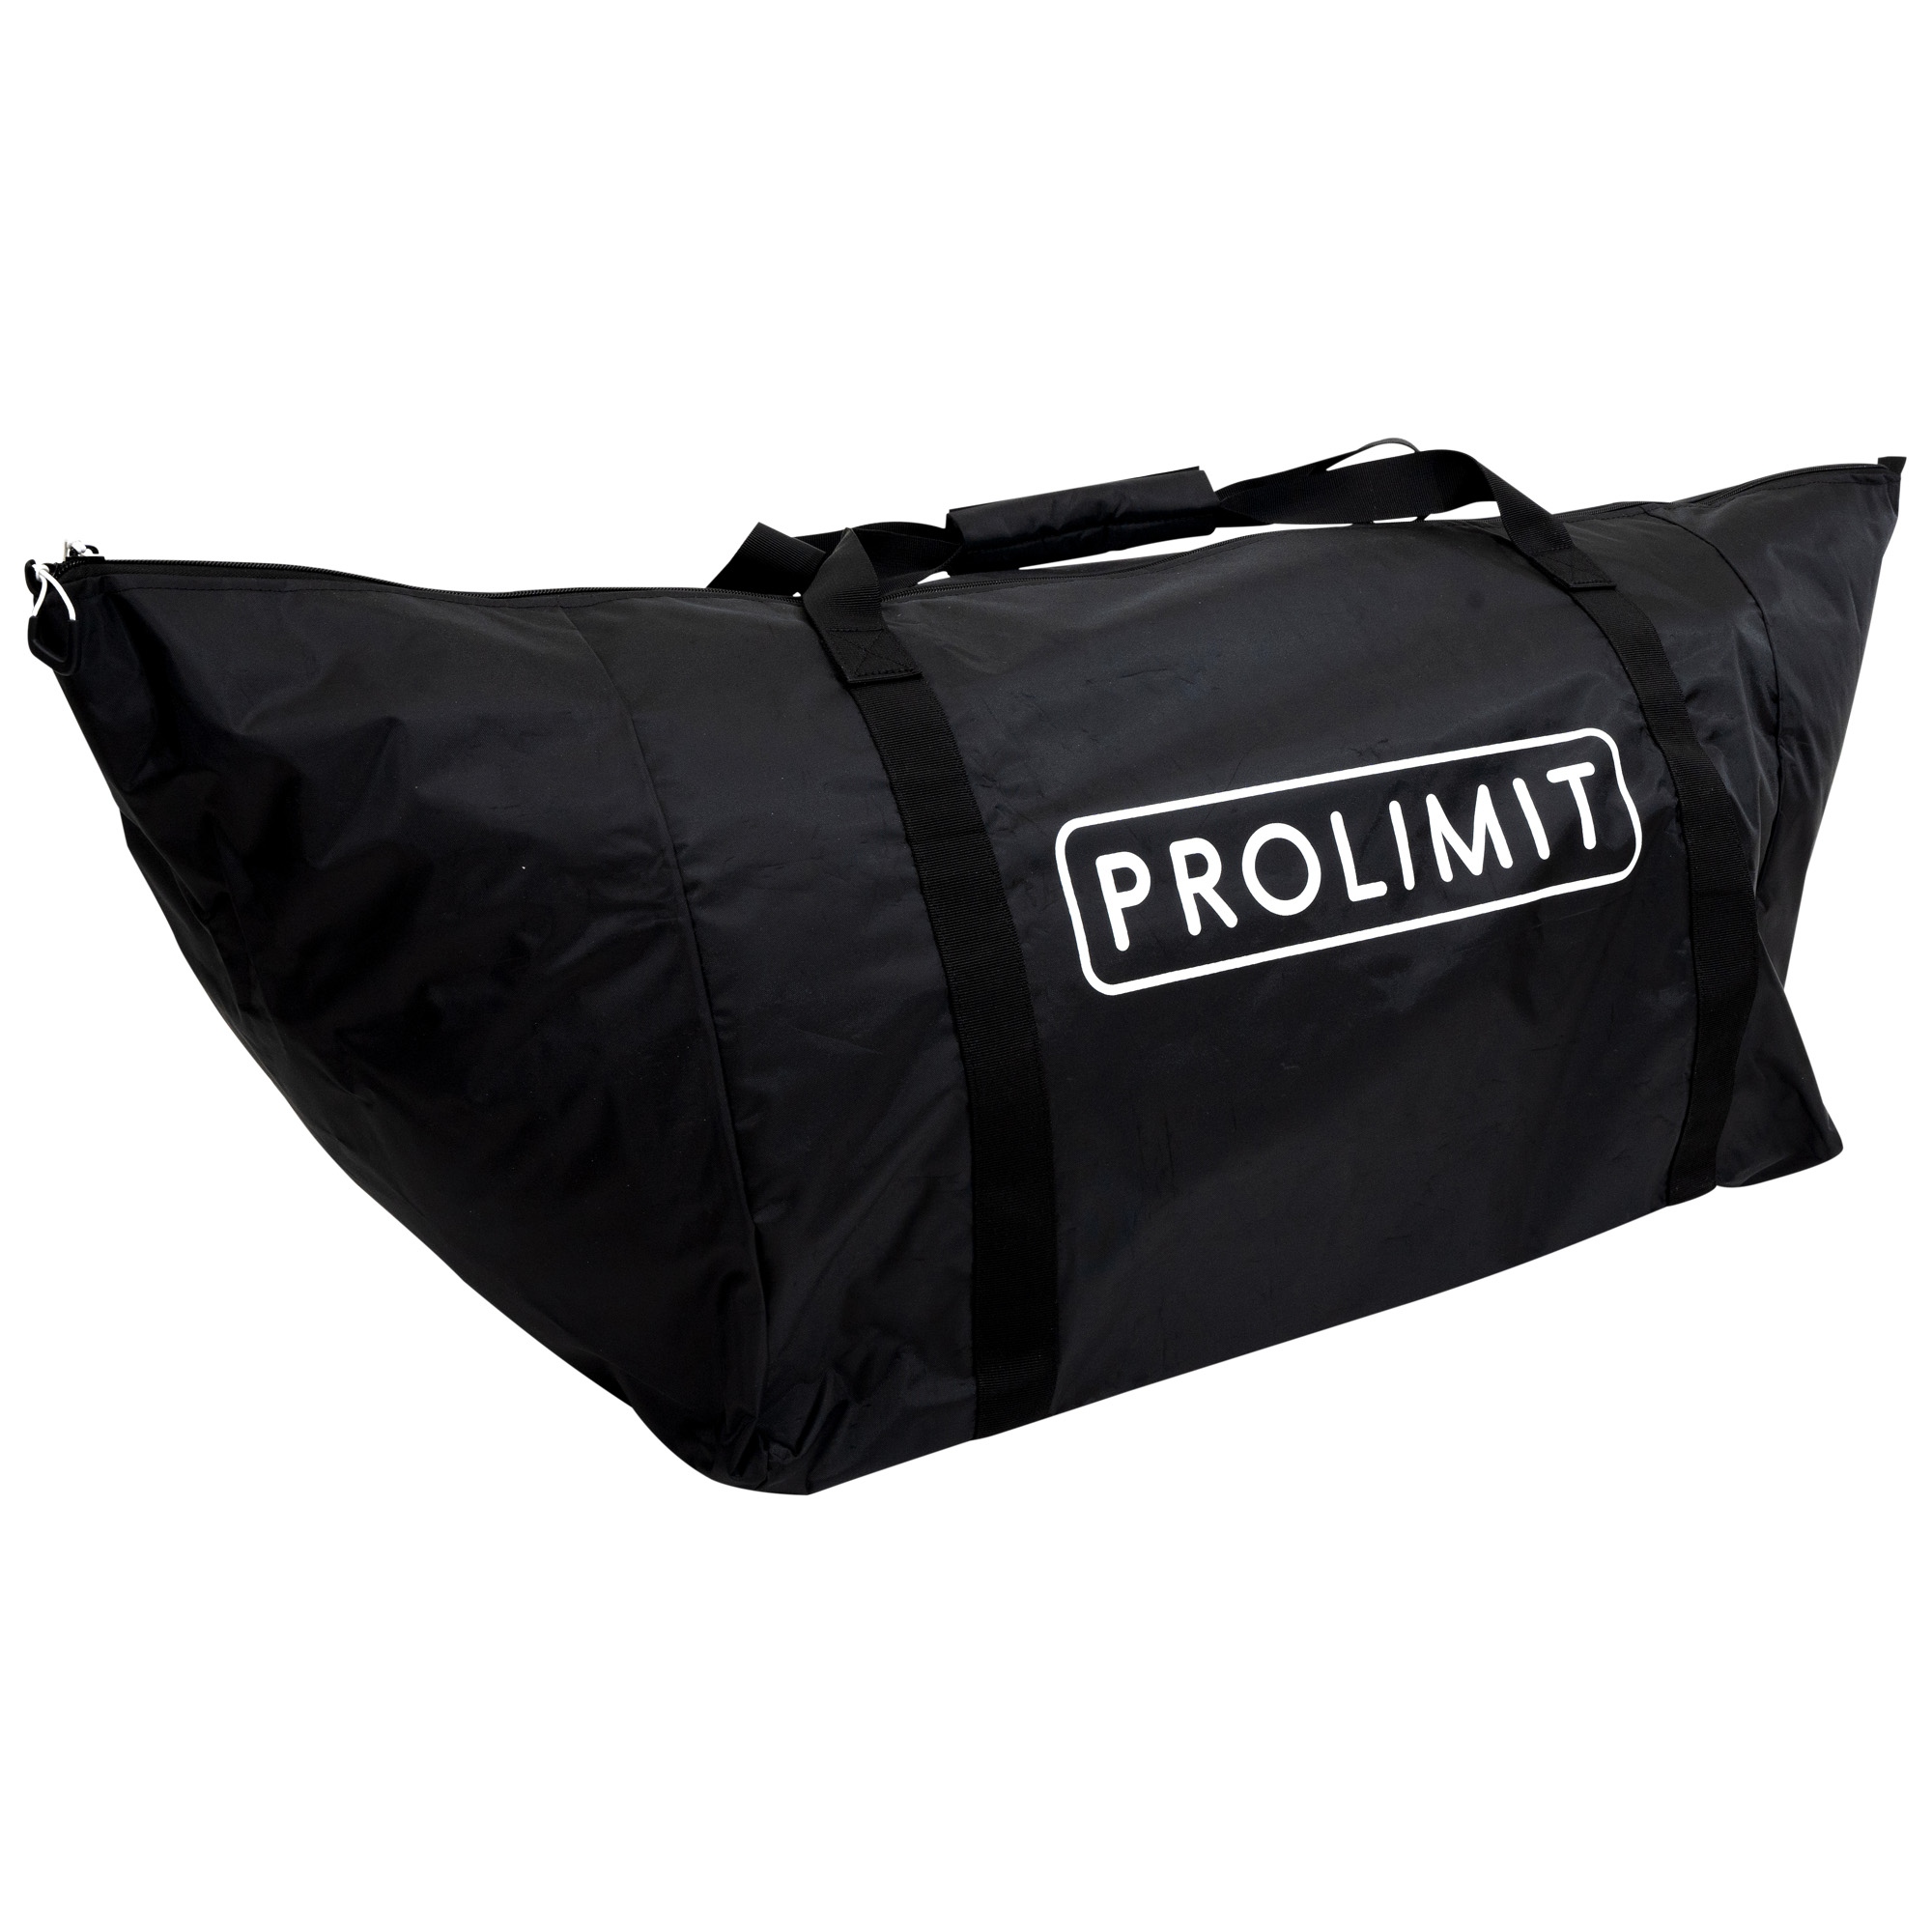 Prolimit Tote Bag